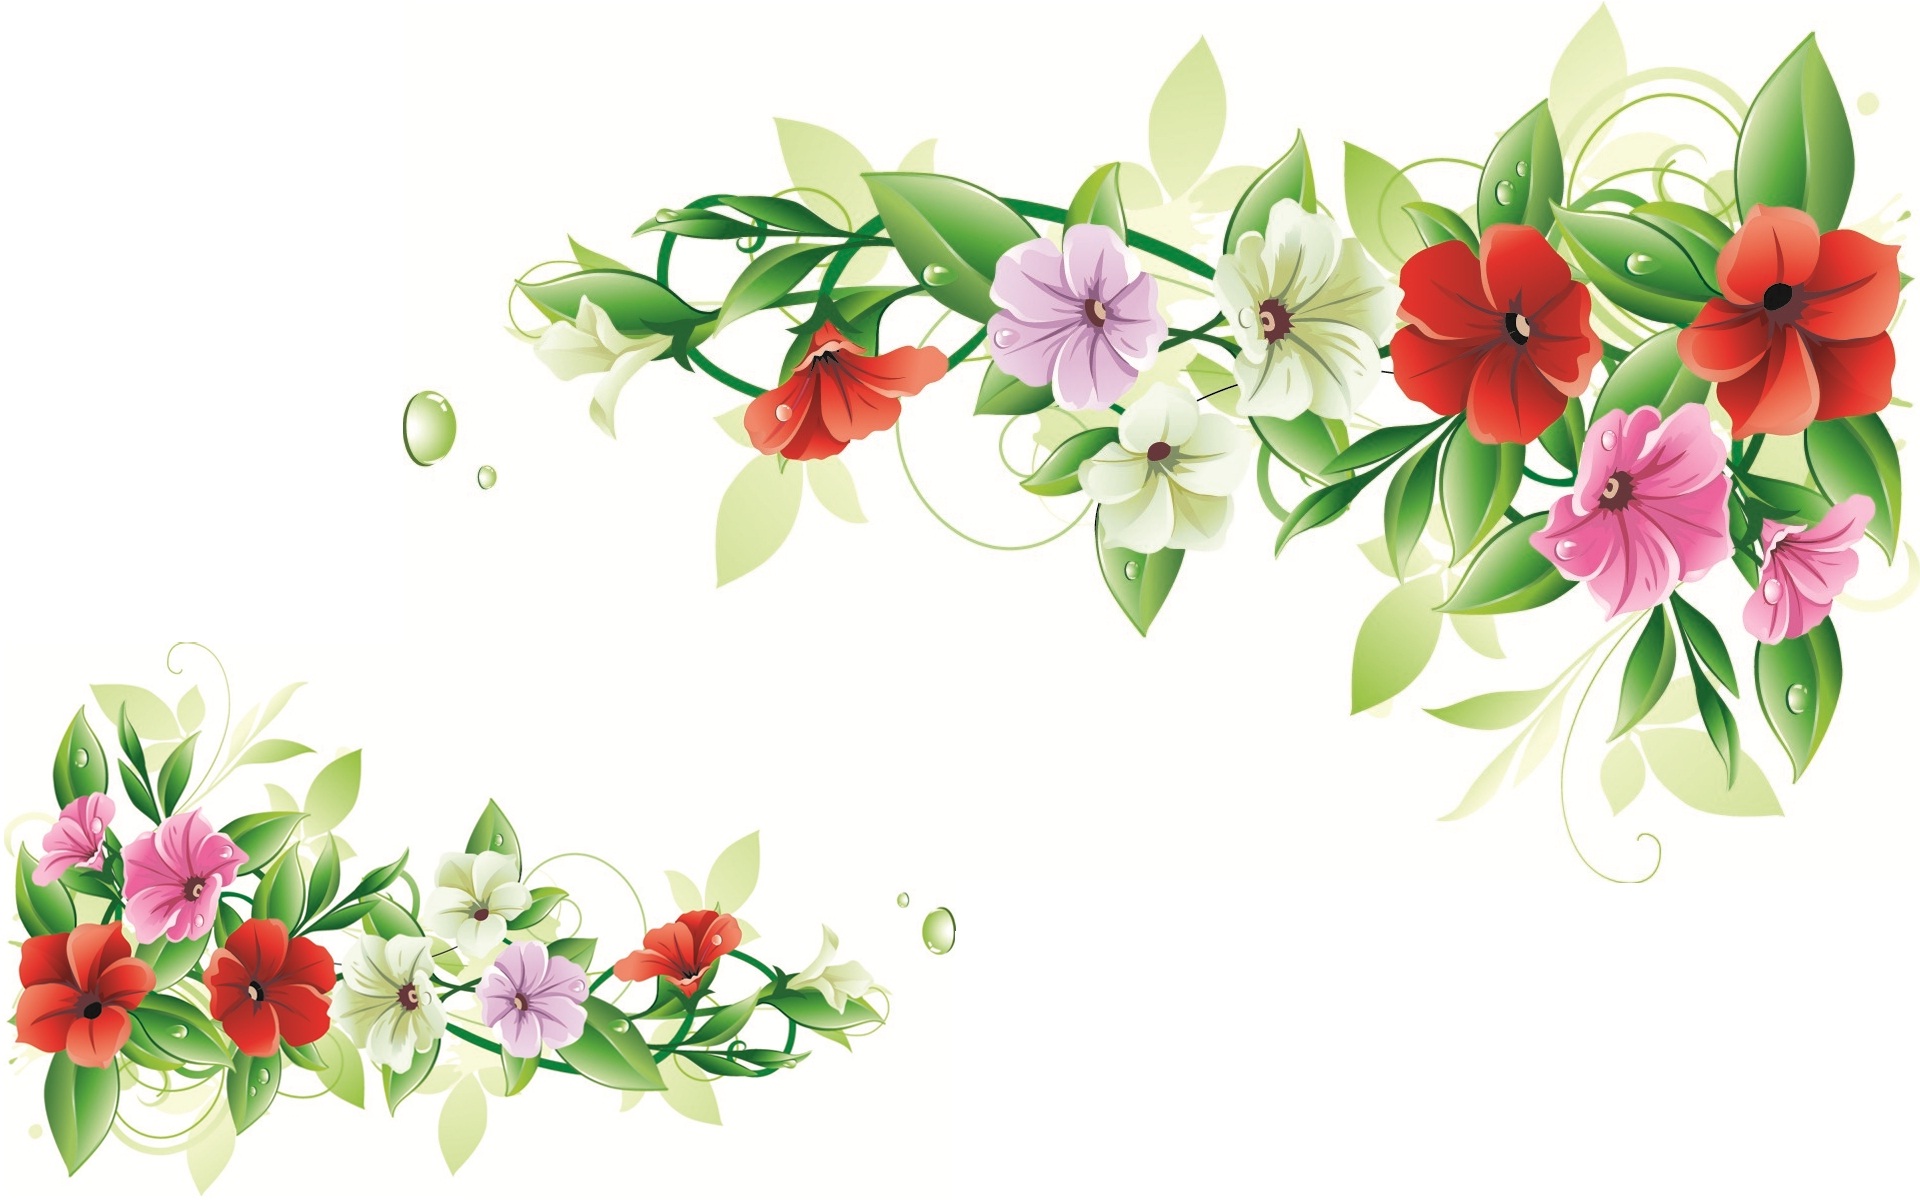 flowers designs clip art free download - photo #42